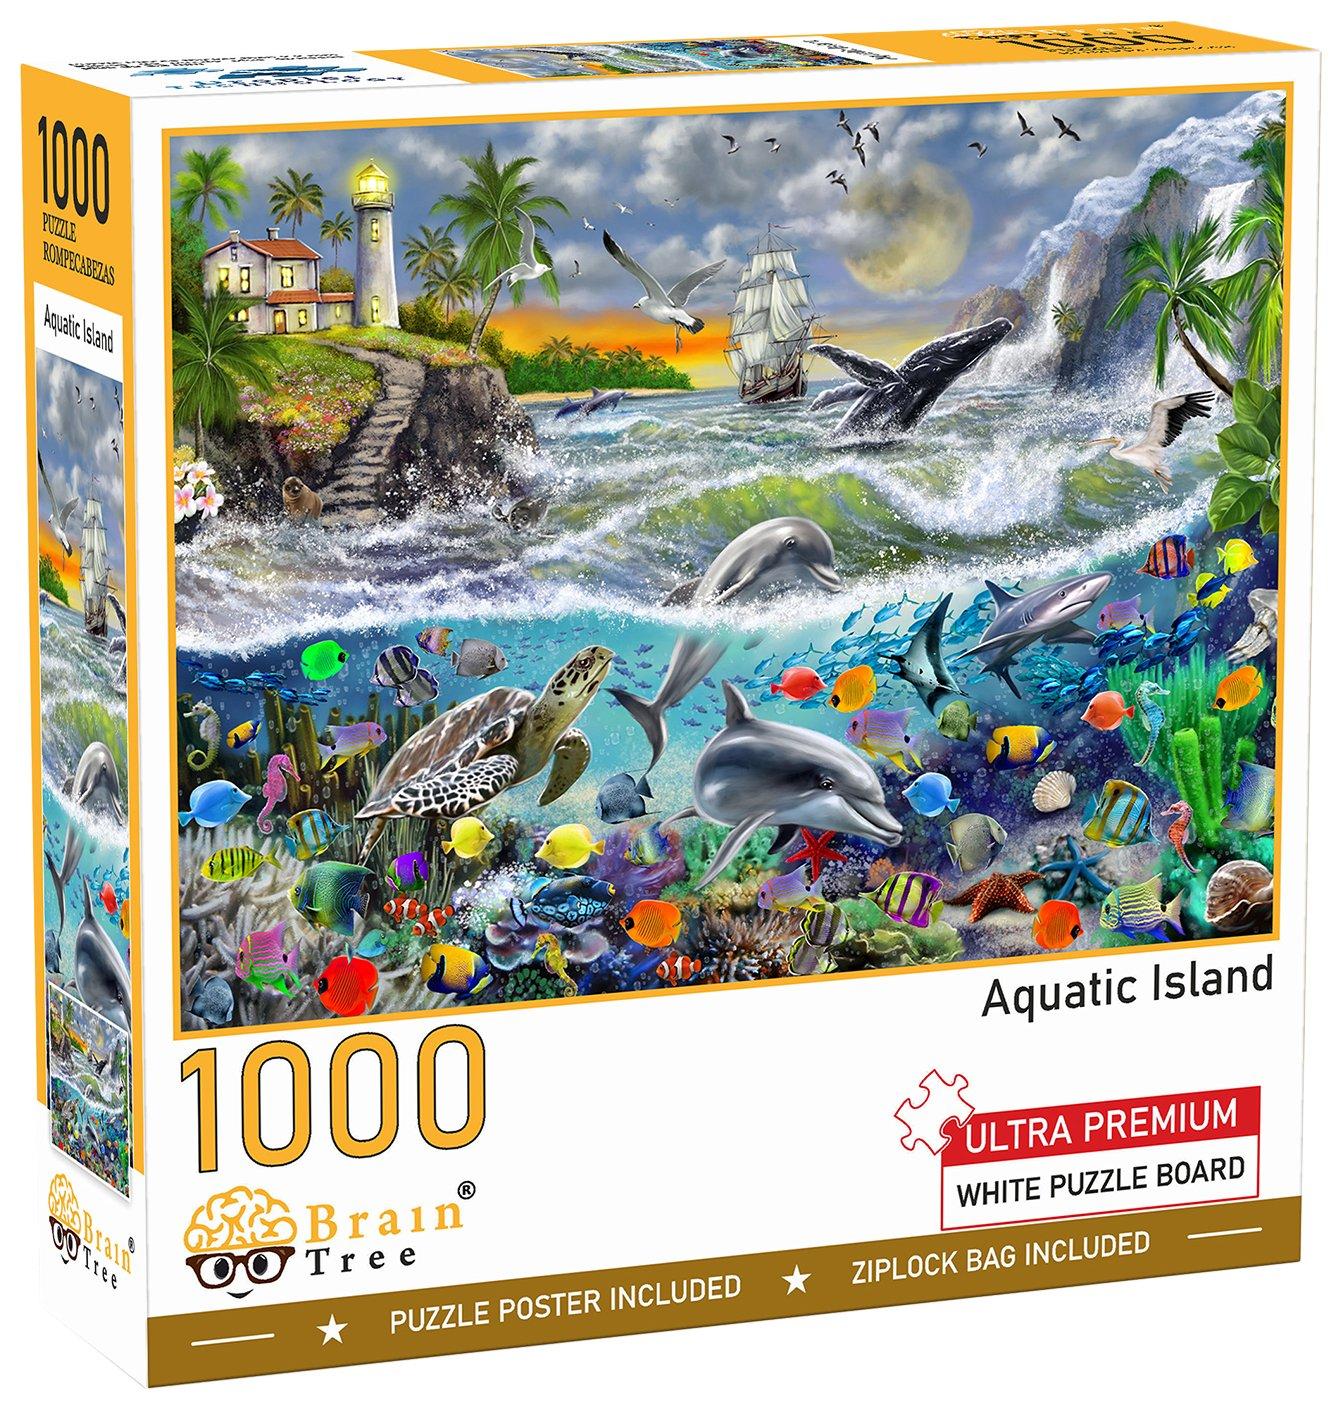 1,000 Piece Aquatic Island Jigsaw Puzzle